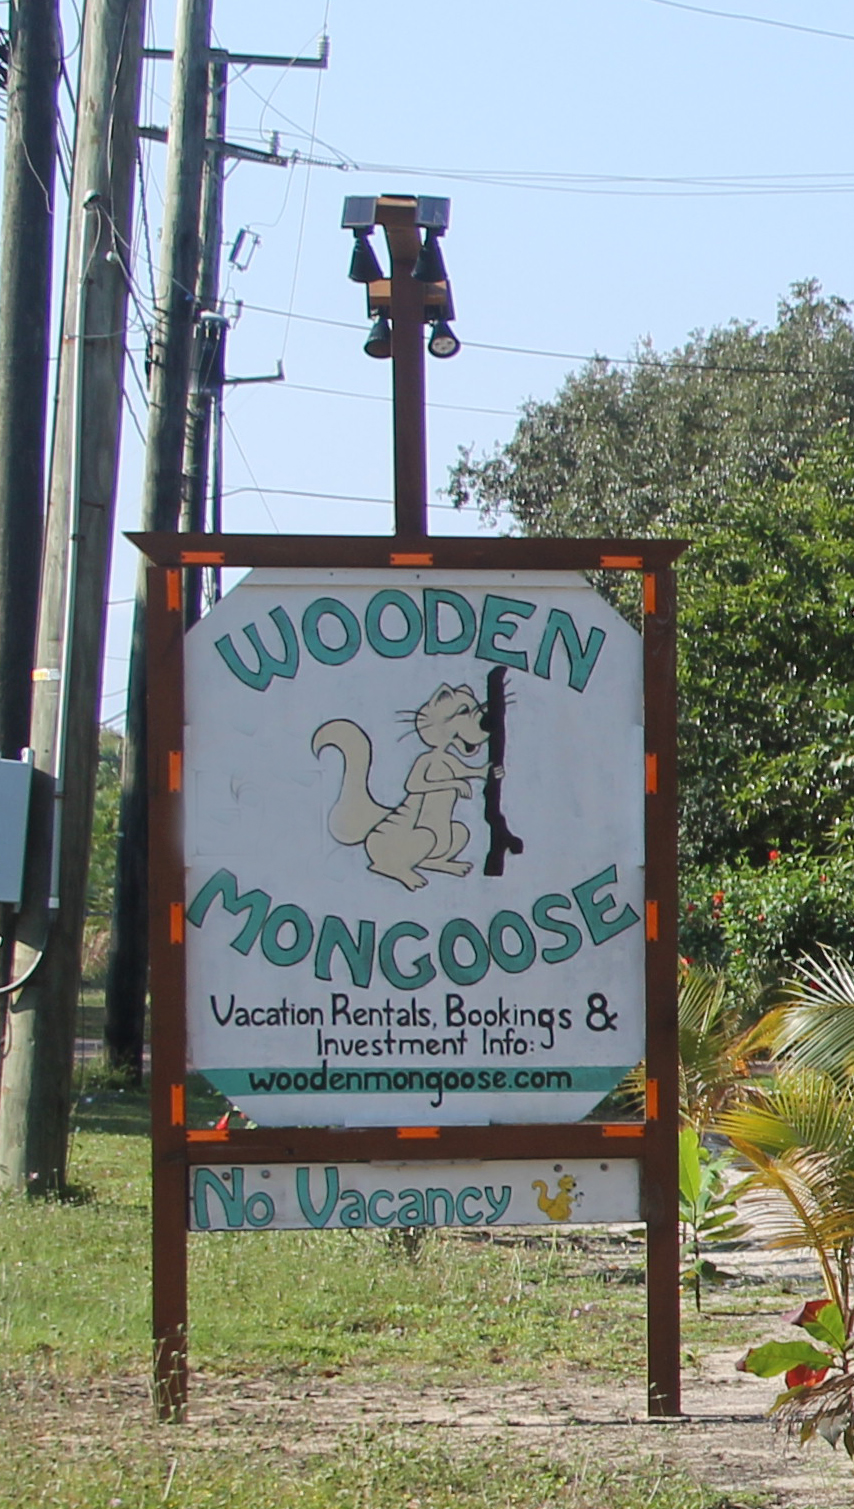 woodenmongoose sign.jpg